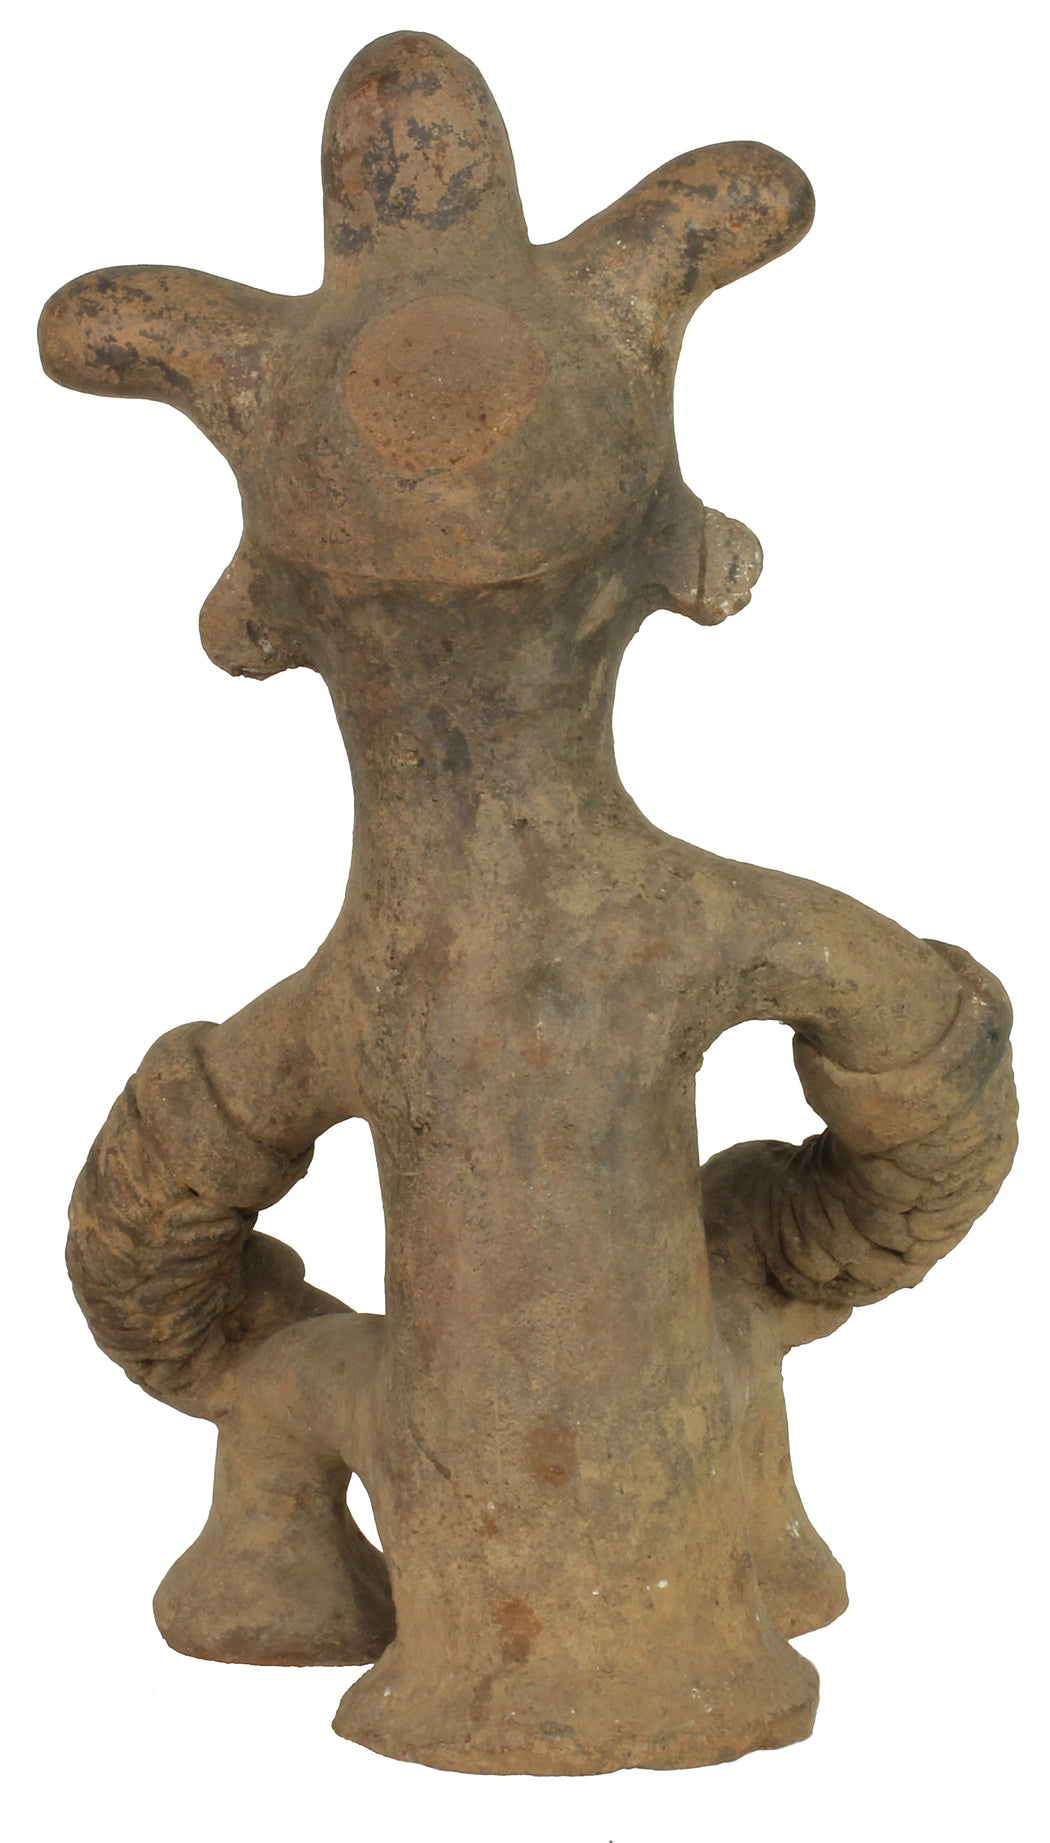 Vintage Terra Cotta Igbo Figure from Nigeria - Niger Bend